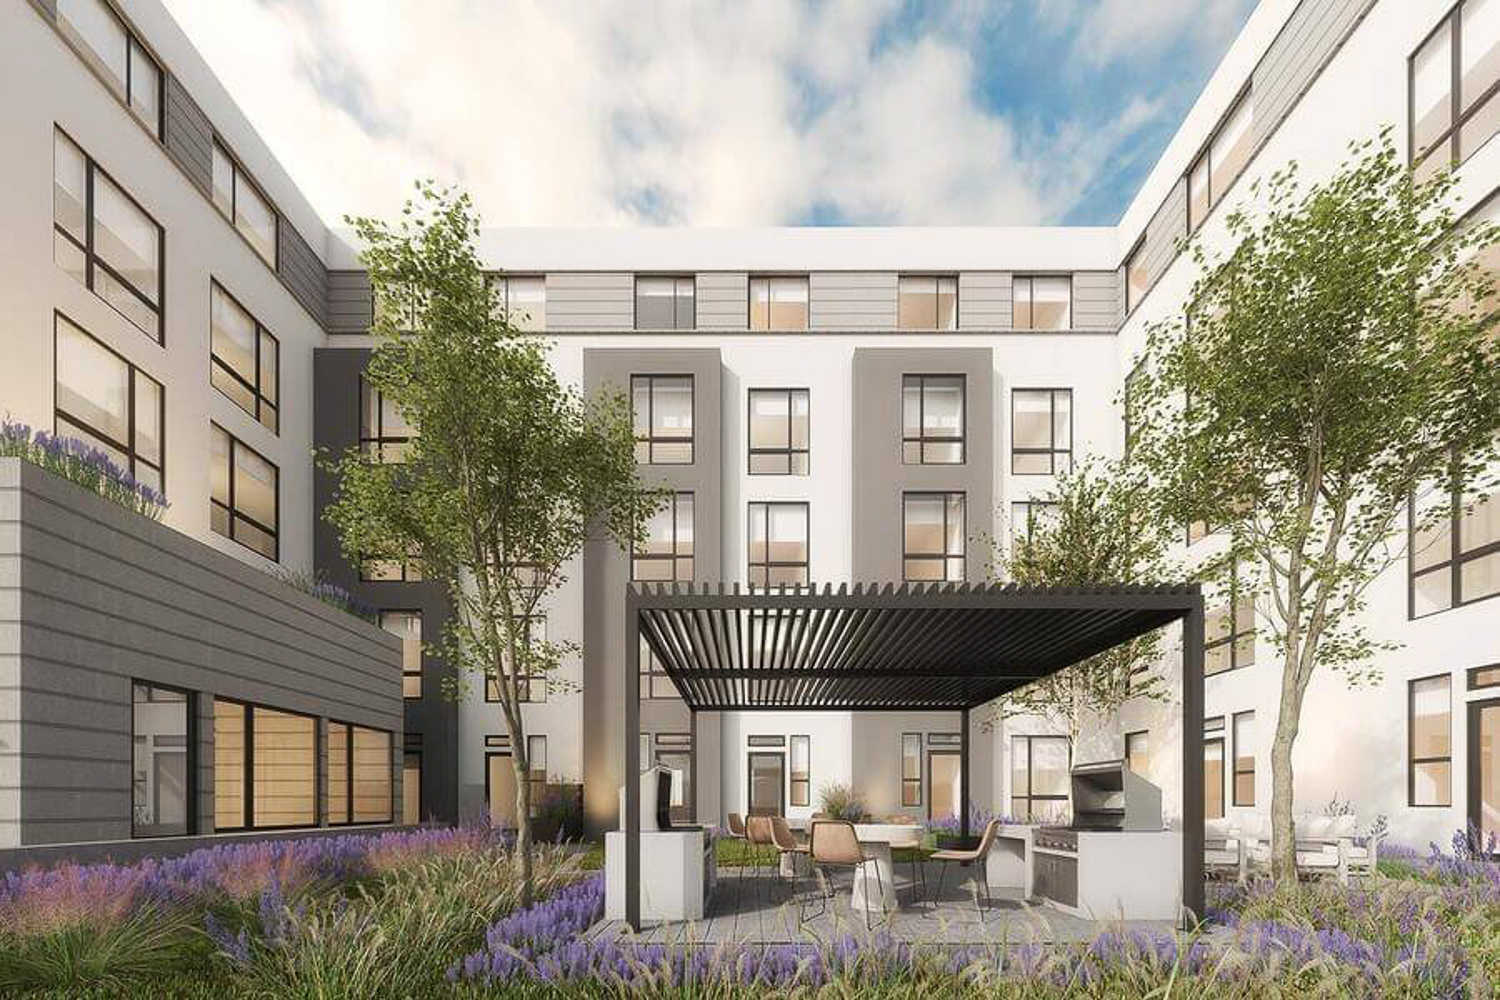 820 West MacArthur Boulevard residential courtyard, rendering by Levy Design Partners via Riaz Capital